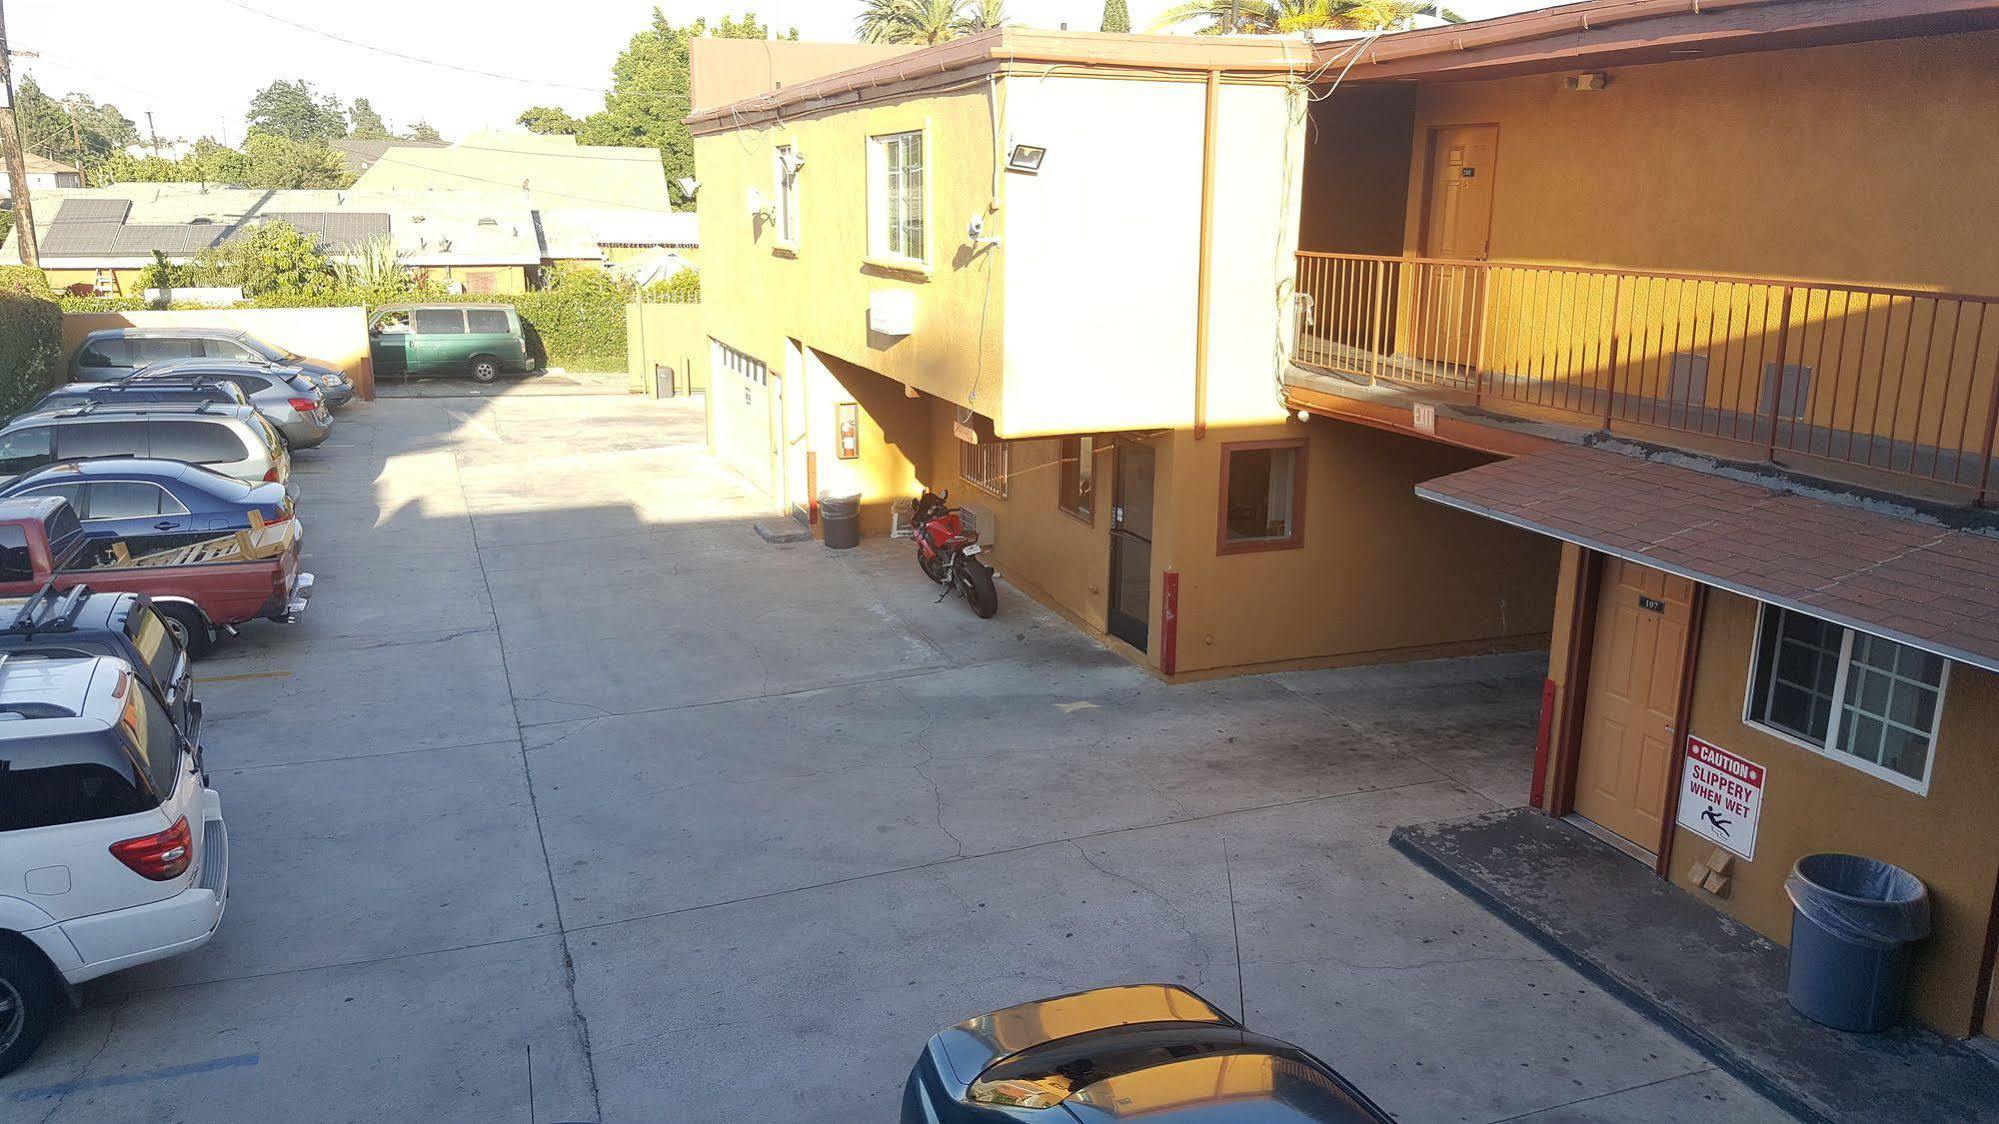 Central Inn Motel Los Angeles Exterior photo